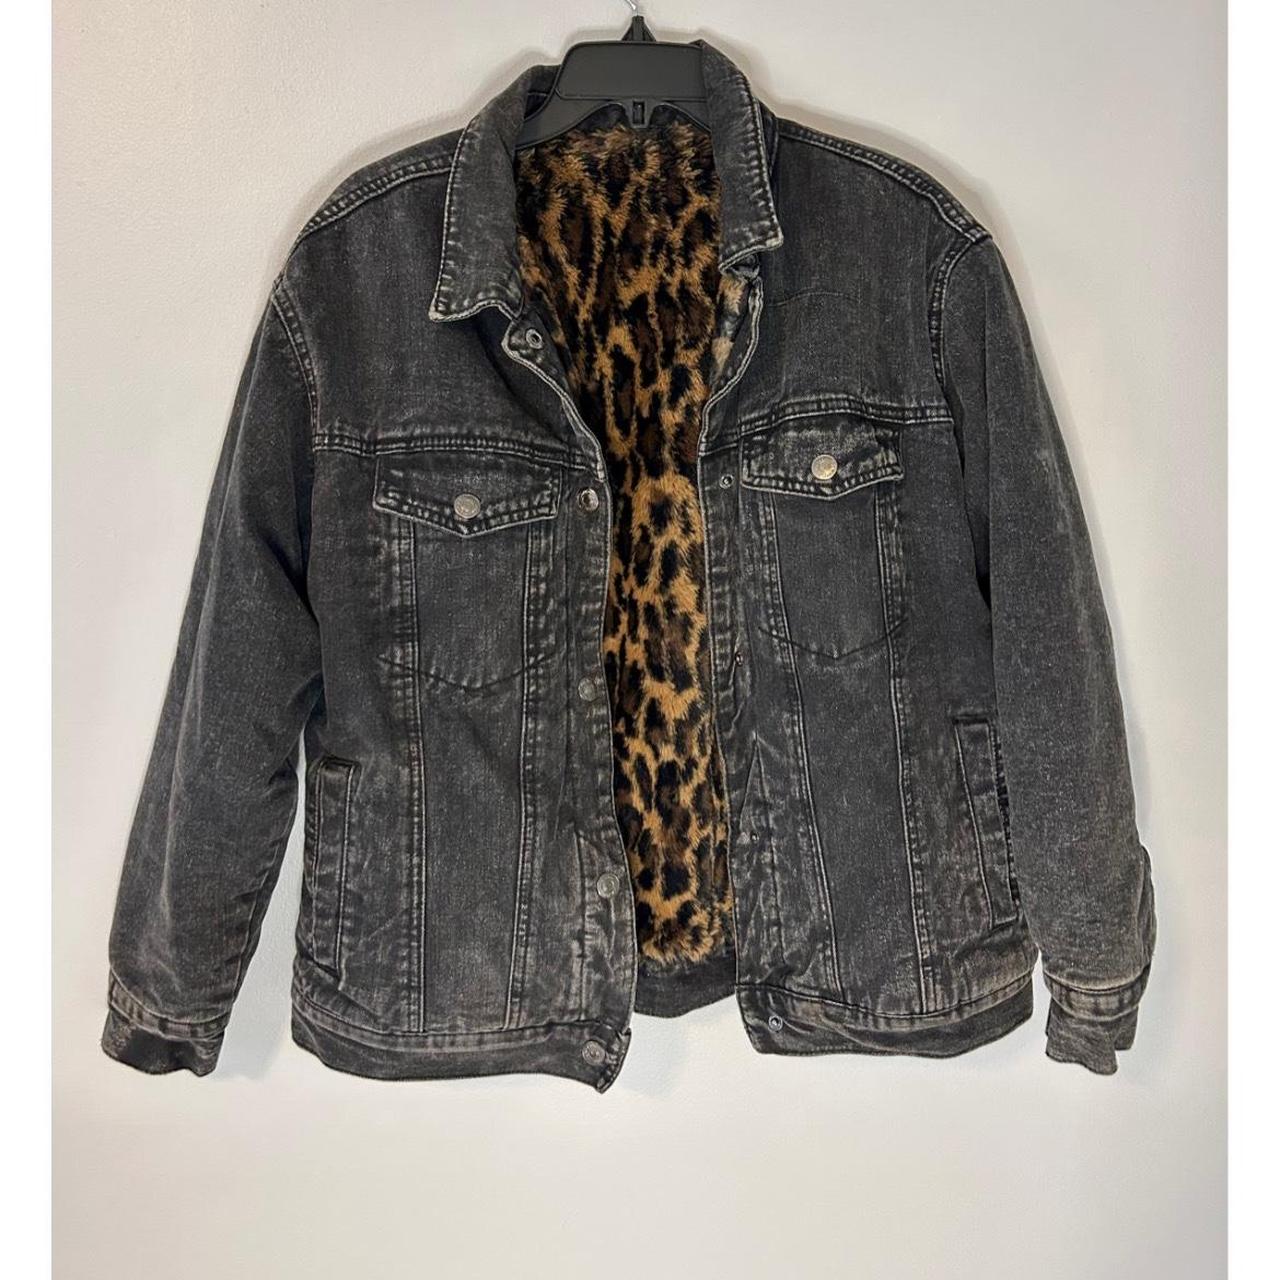 Black jean jacket with cheetah print on inside. Size... - Depop